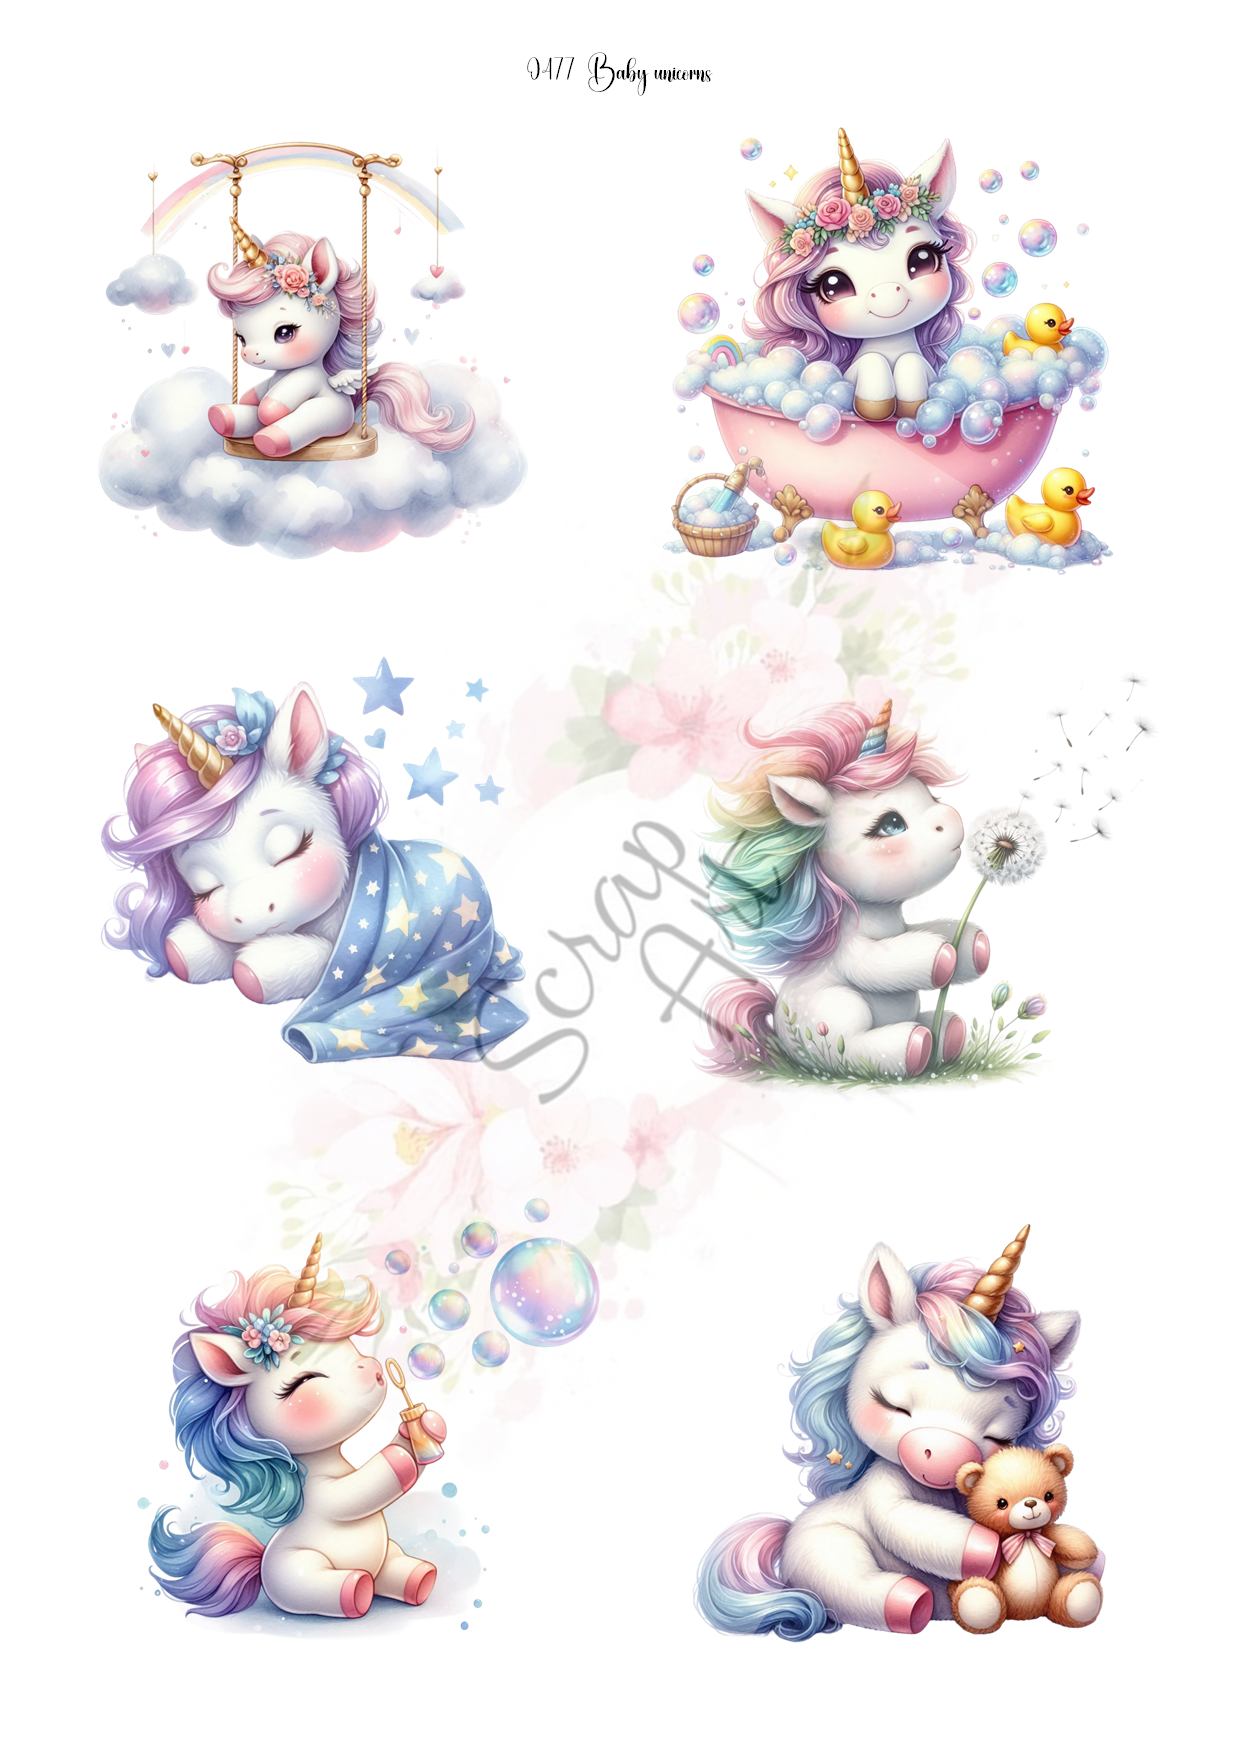 0477 Baby unicorns